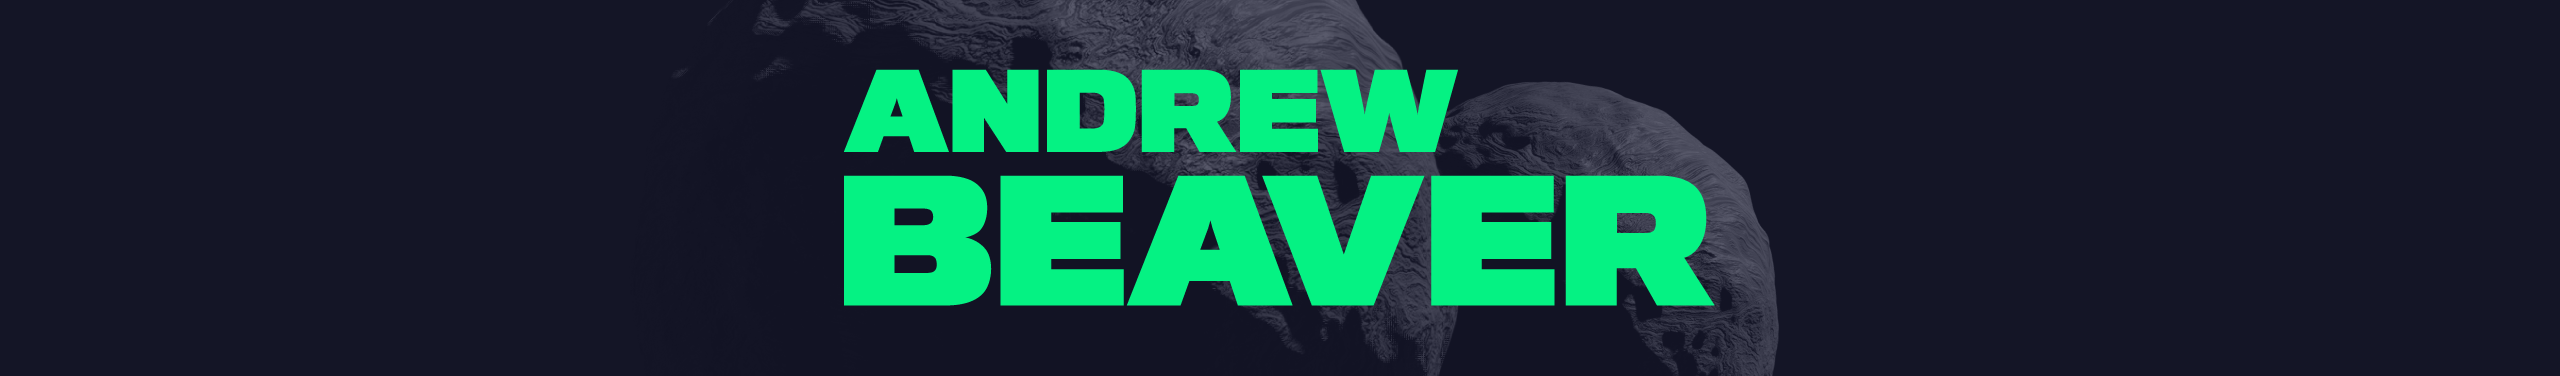 Banner de perfil de Andrew Beaver